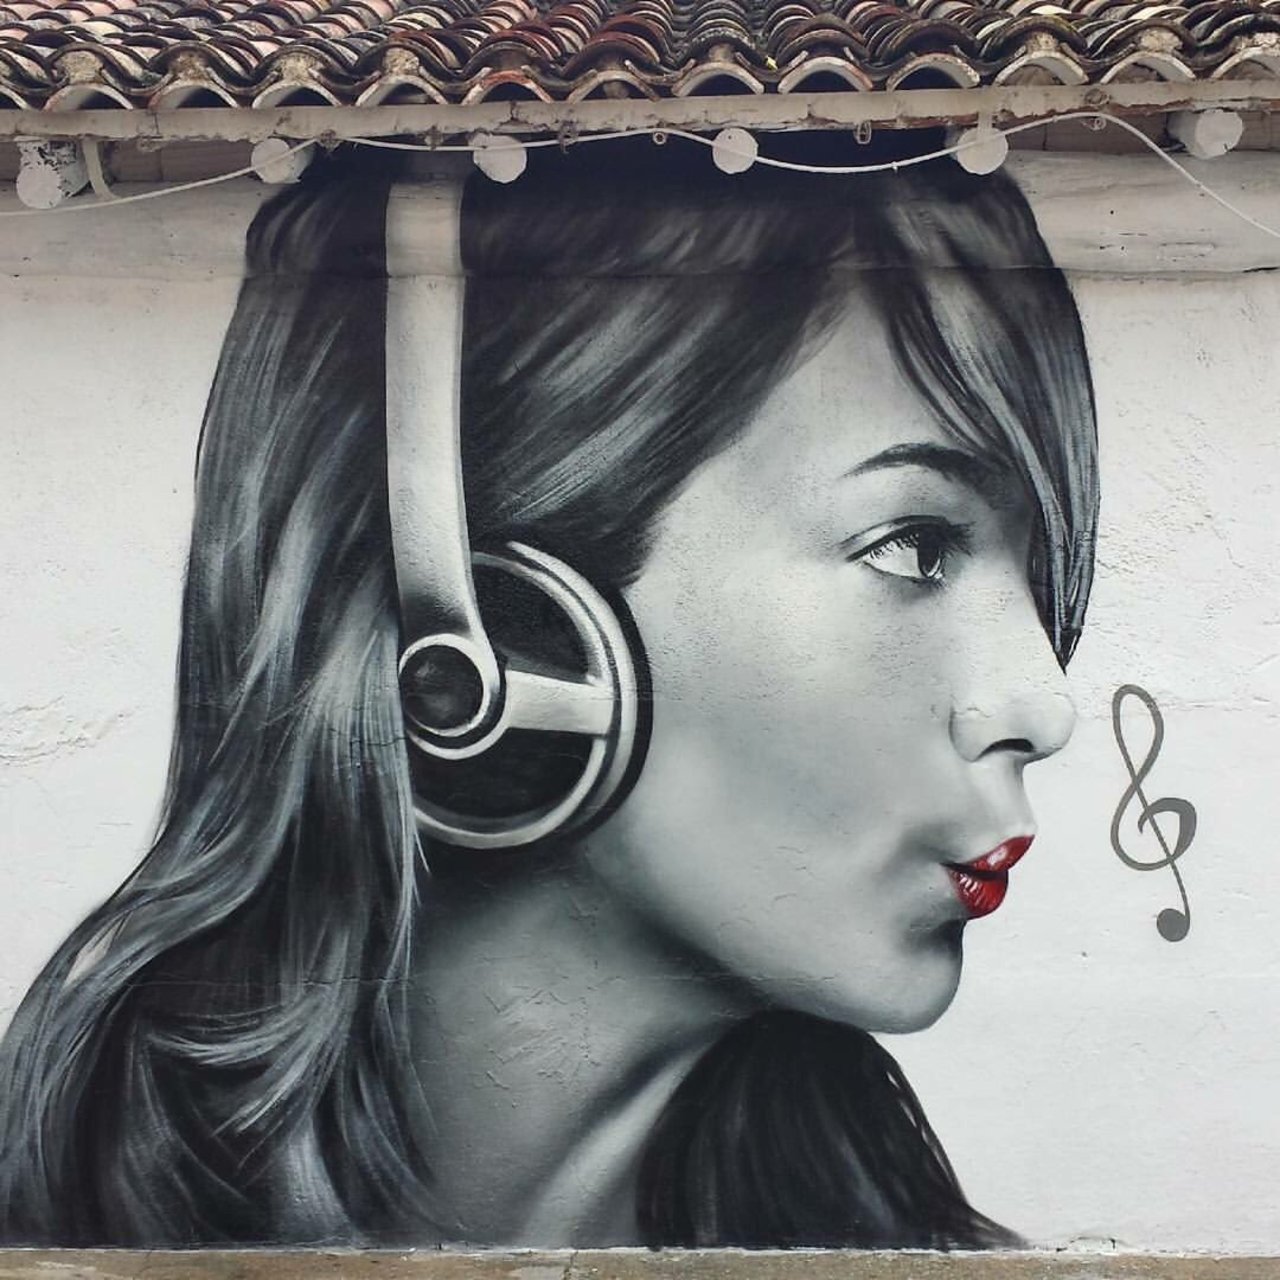 Xolaka Street Art   Valencia, Spain 🇪🇸 #art #mural #graffiti #streetart via @QueGraffiti #designthinking #photography https://t.co/QbGCp8sW5o